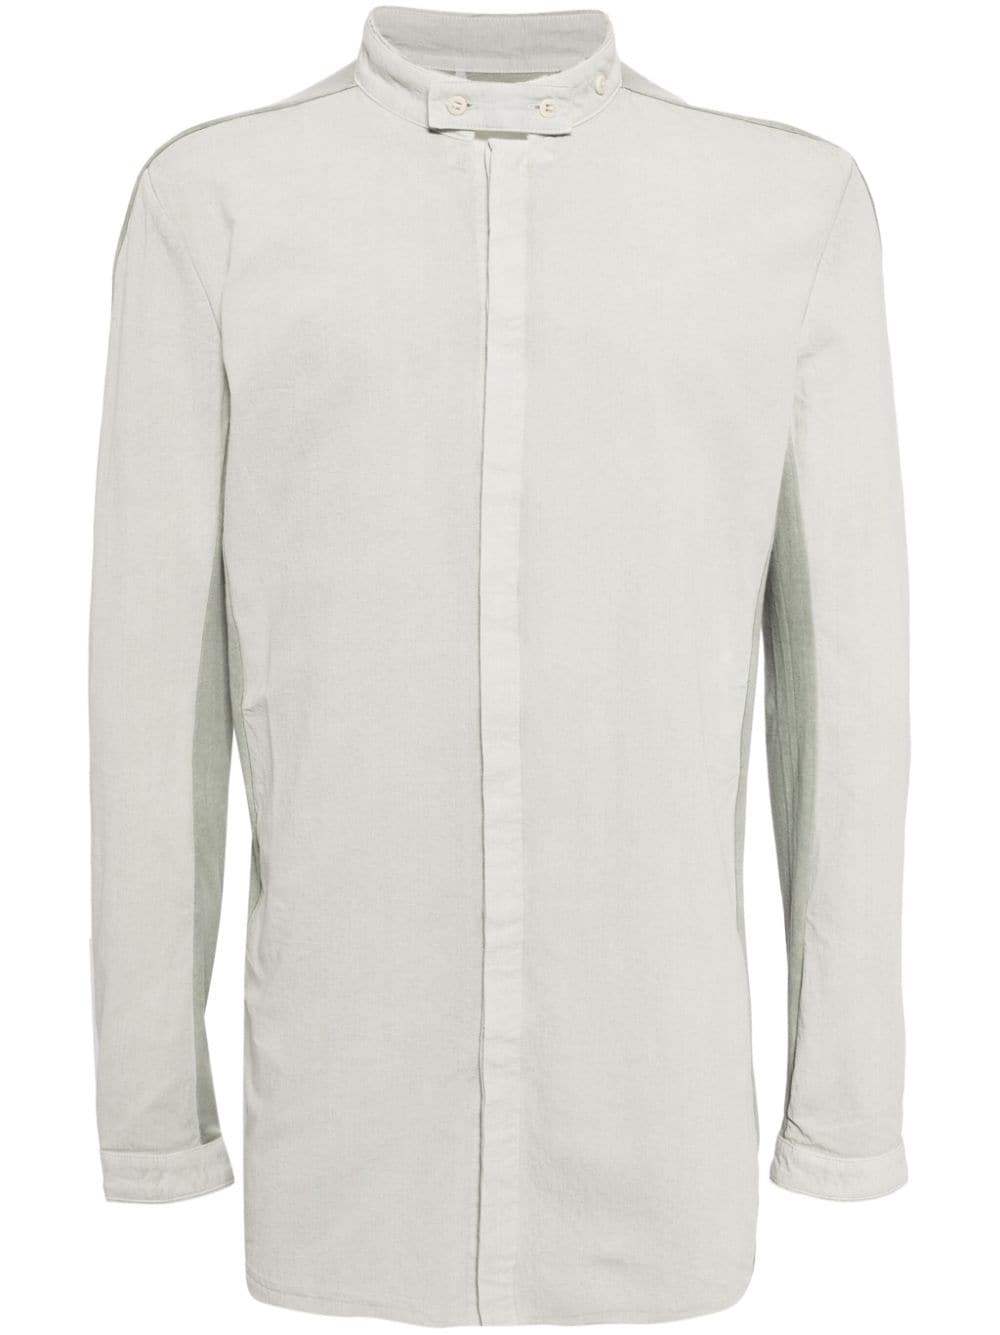 stand-up-collar long-sleeve cotton shirt